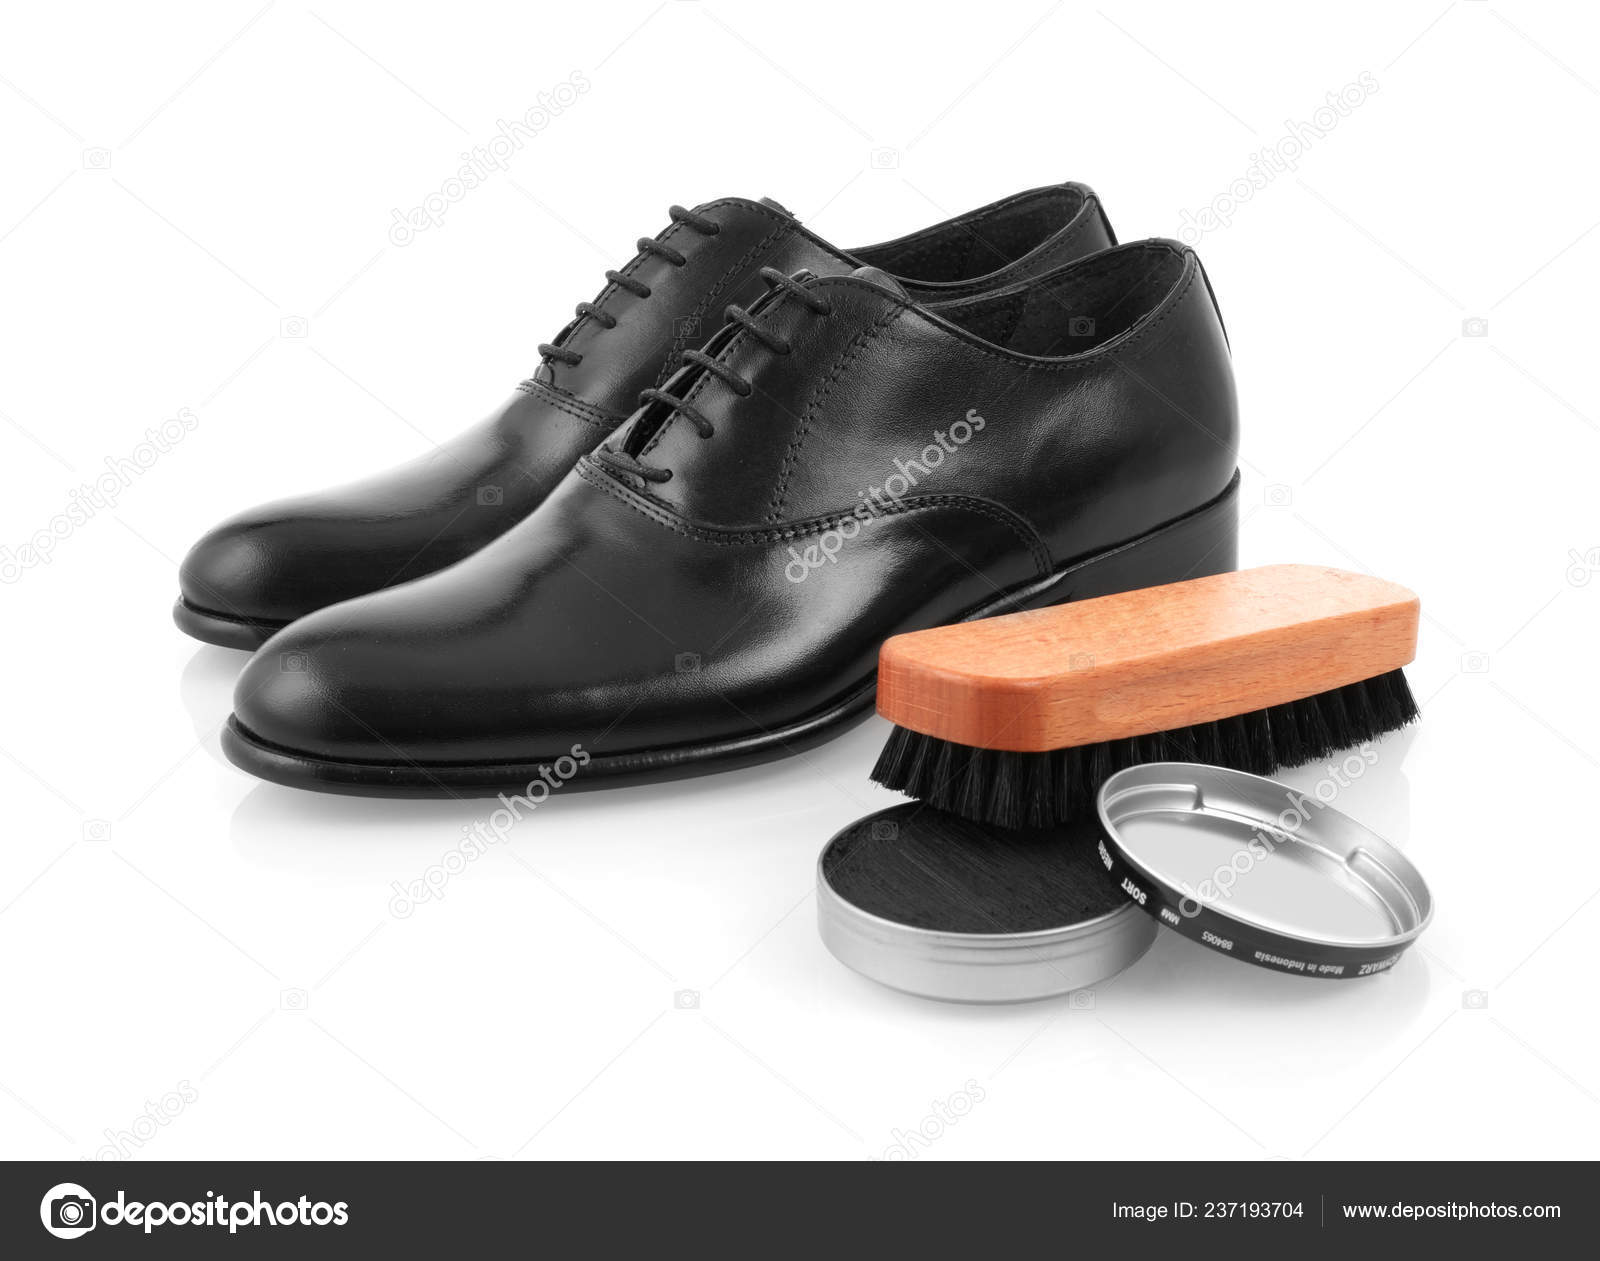 polish the shoes